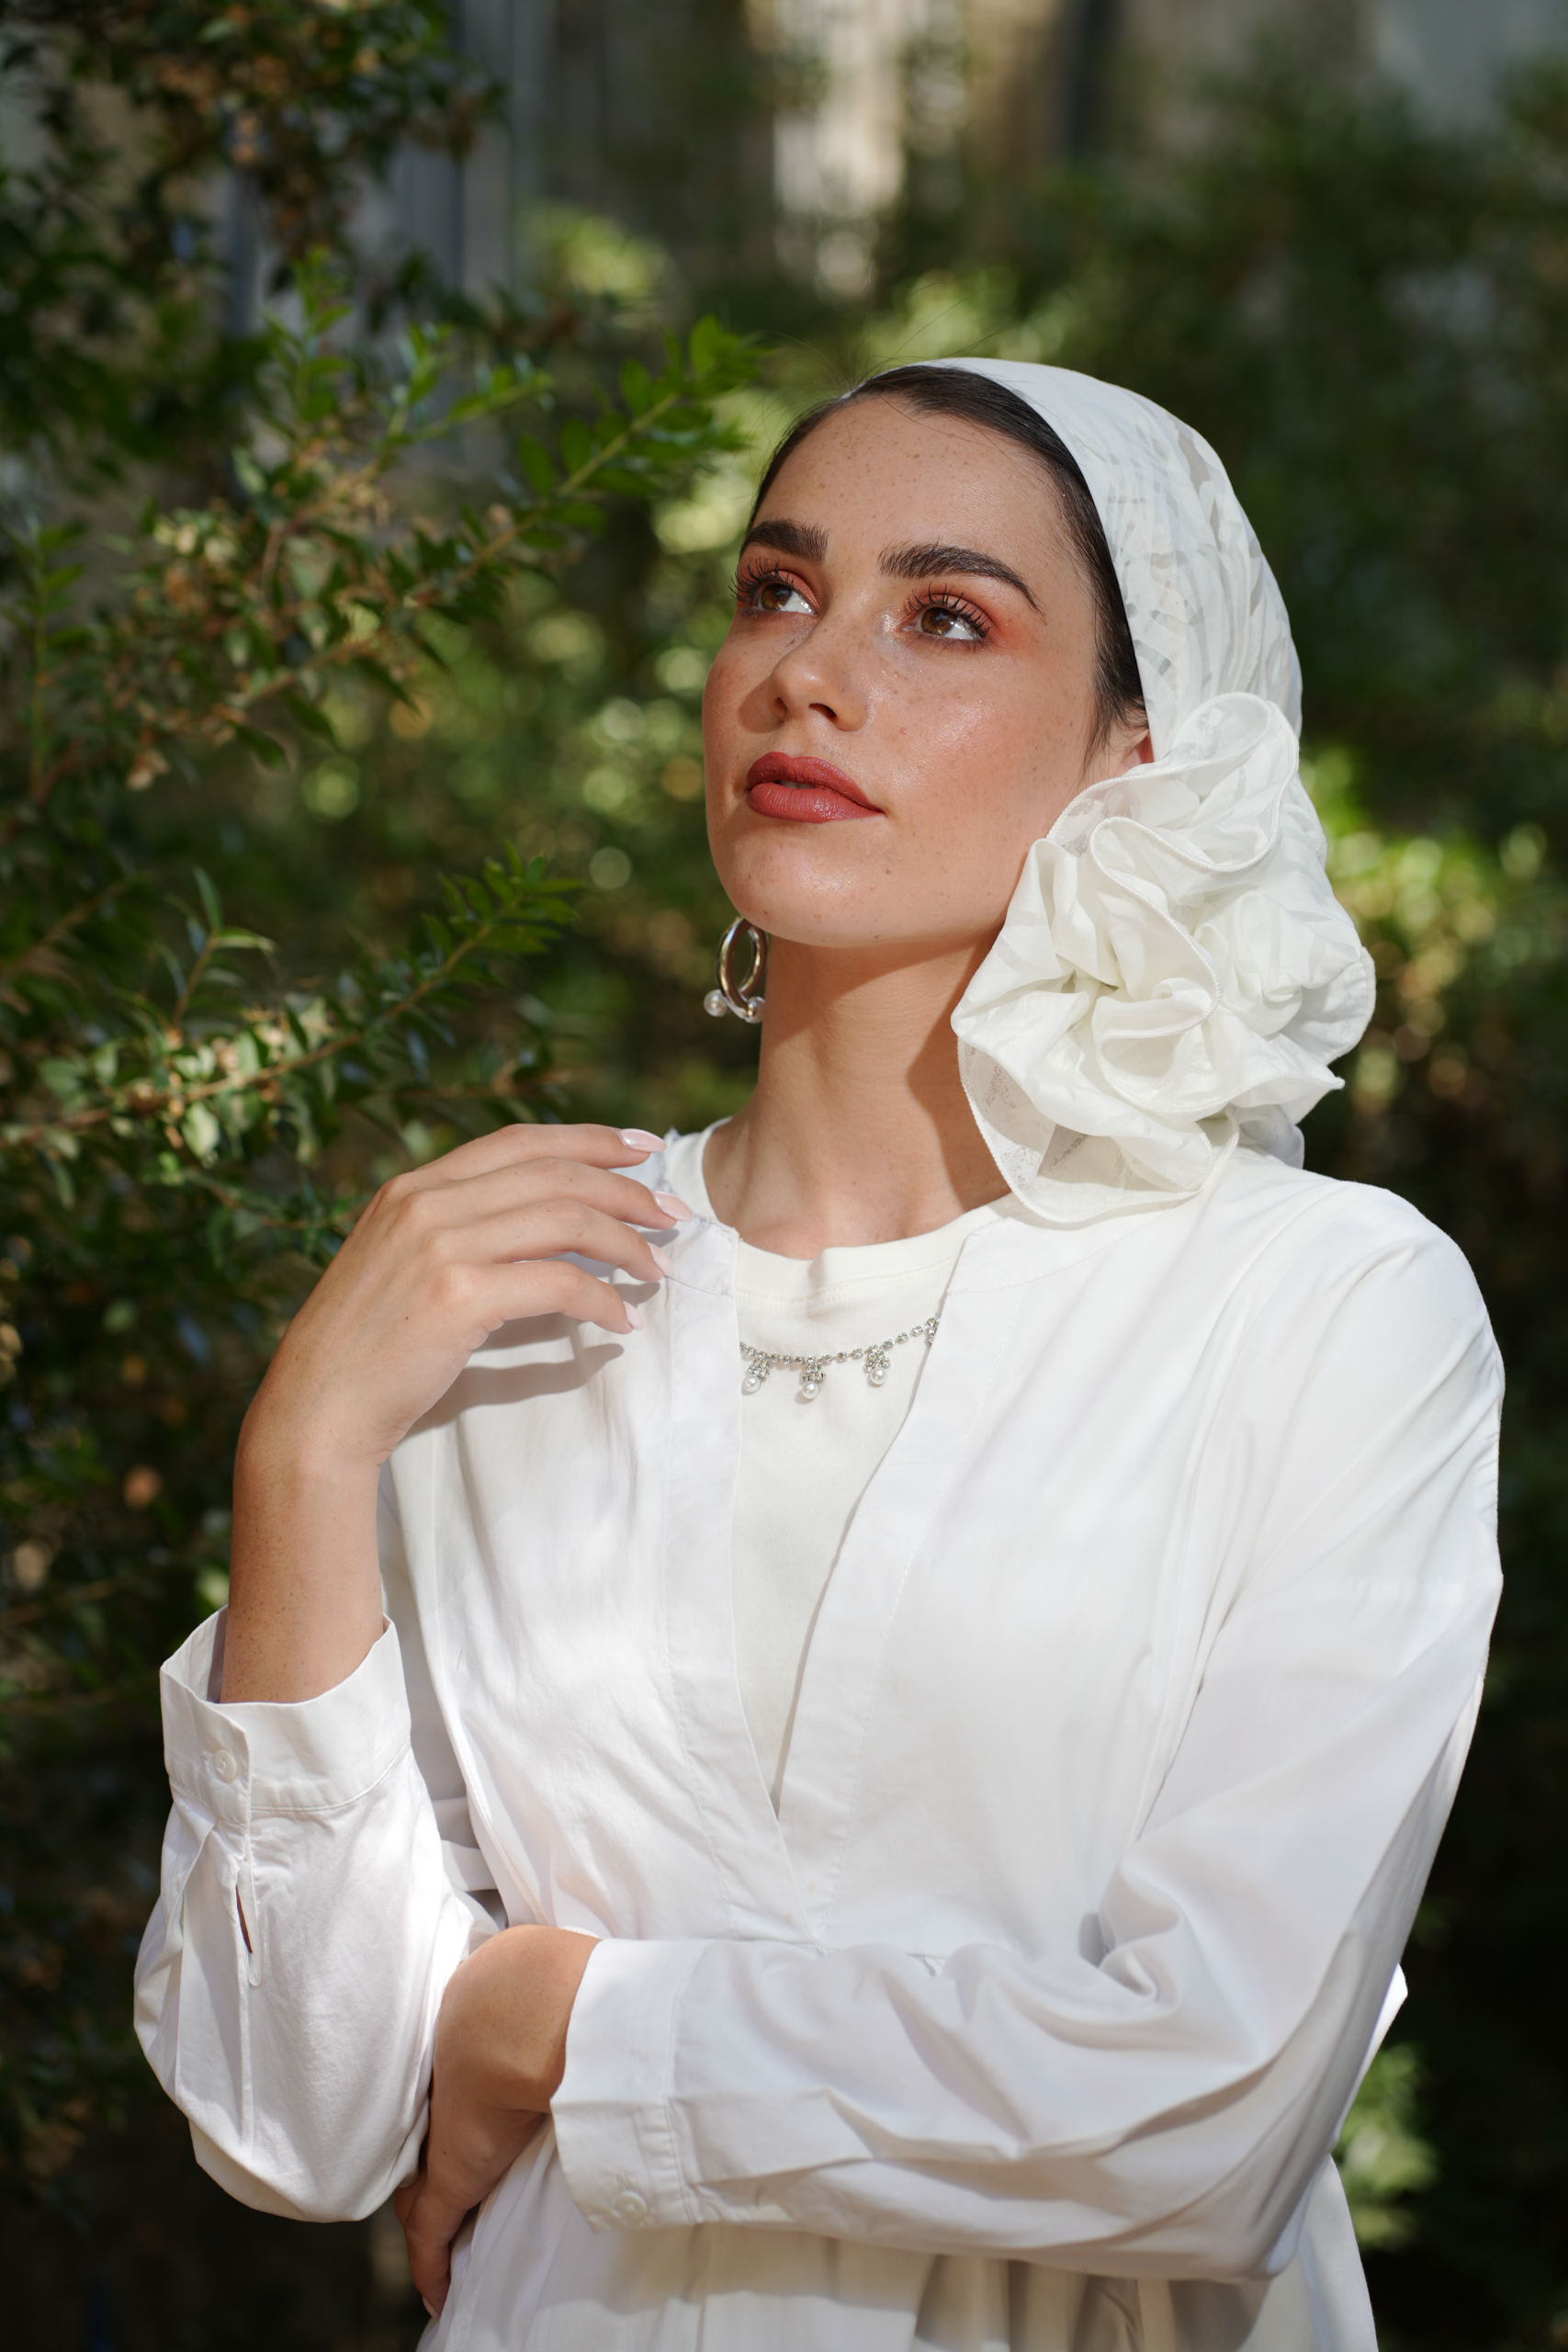 White Evening Headscarf